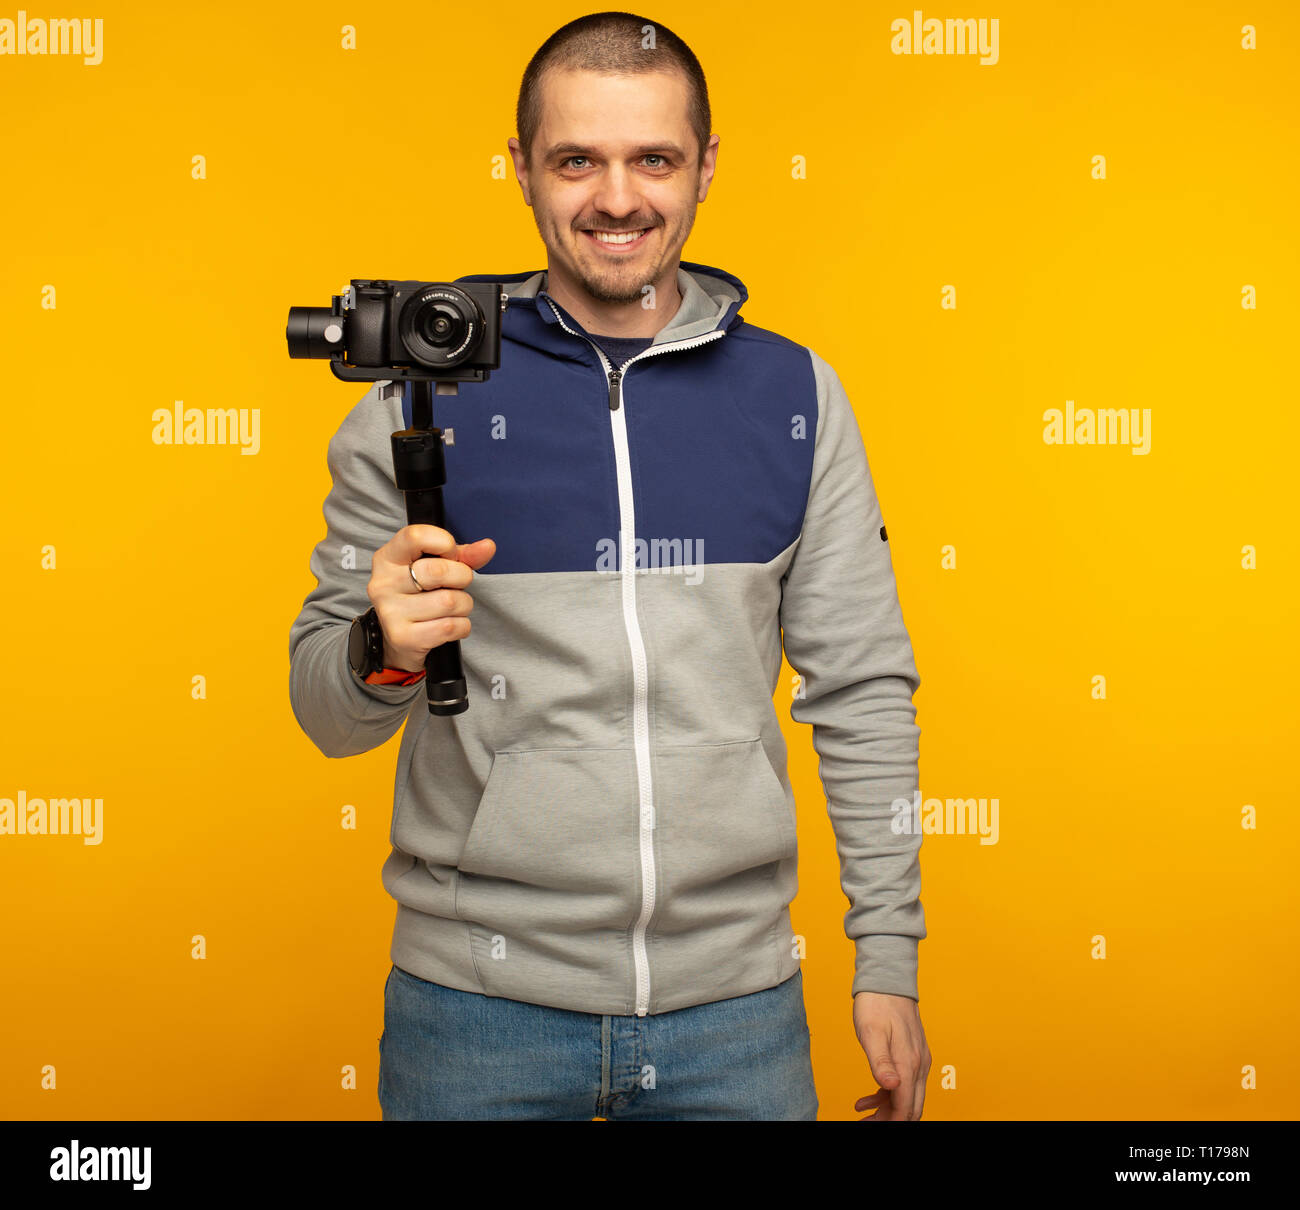 Mann videofilmer oder Blogger mit Kamera auf Gimbal Stockfotografie - Alamy